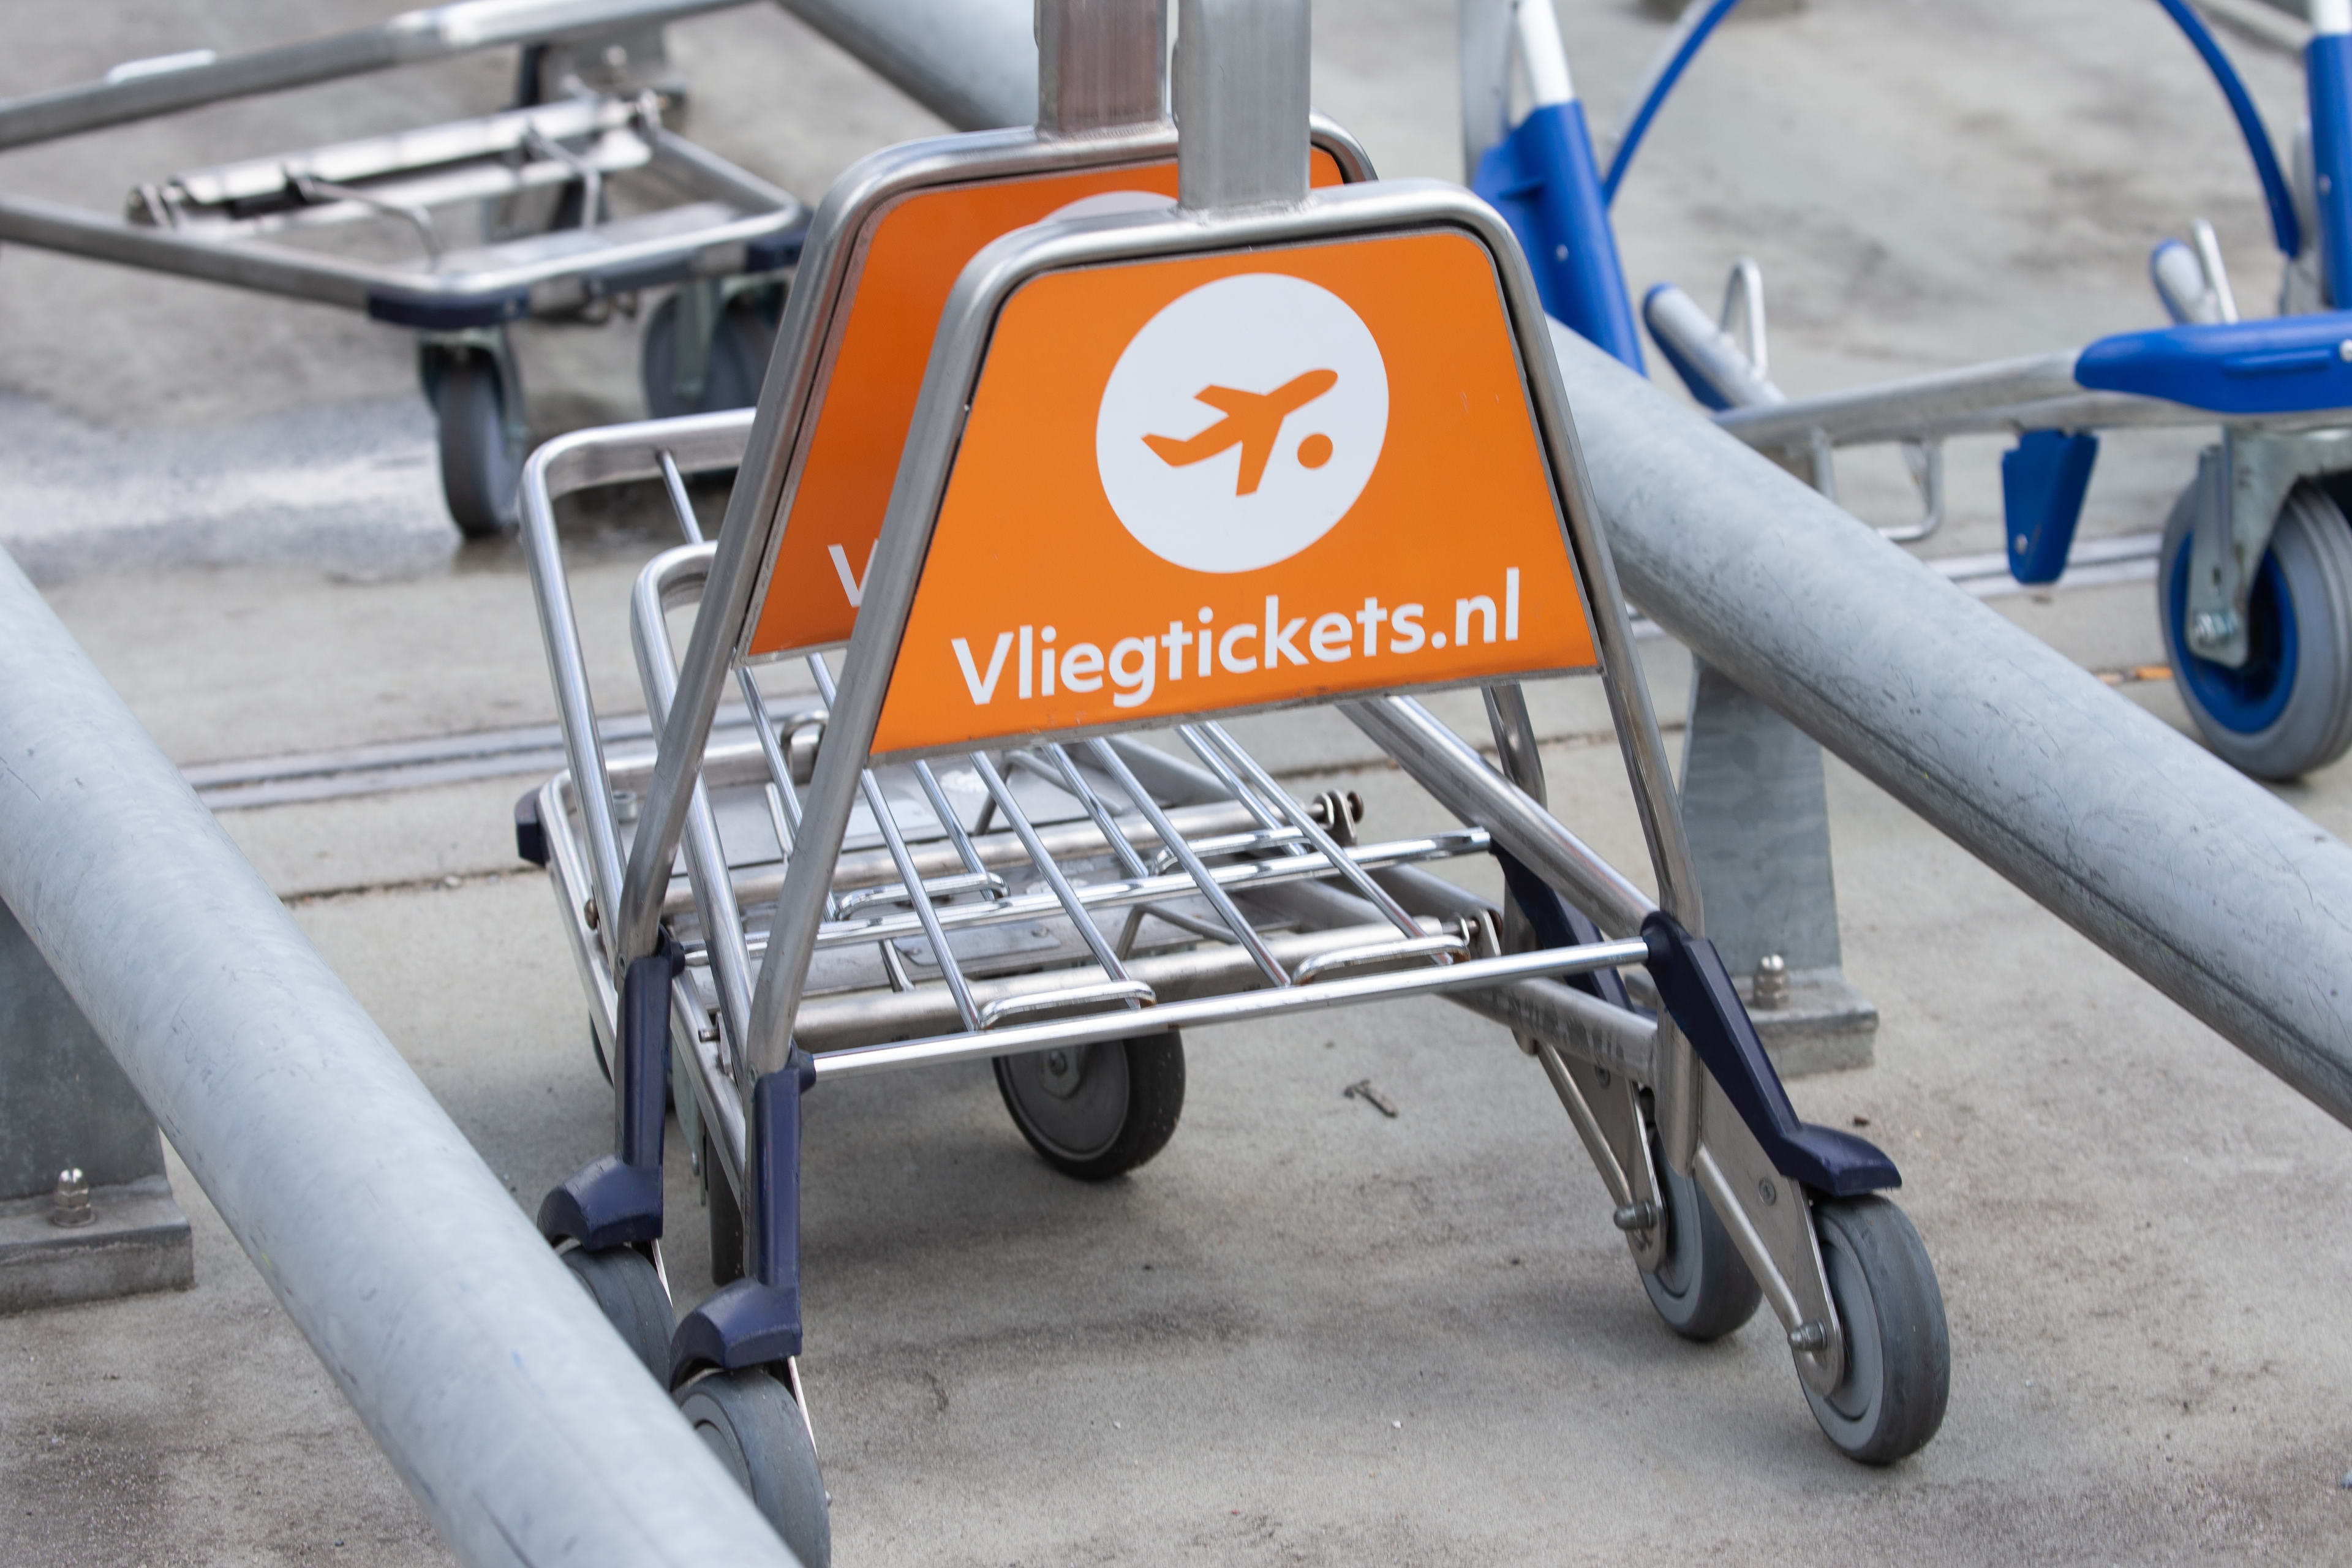 Bedrijf achter Vliegtickets.nl failliet verklaard